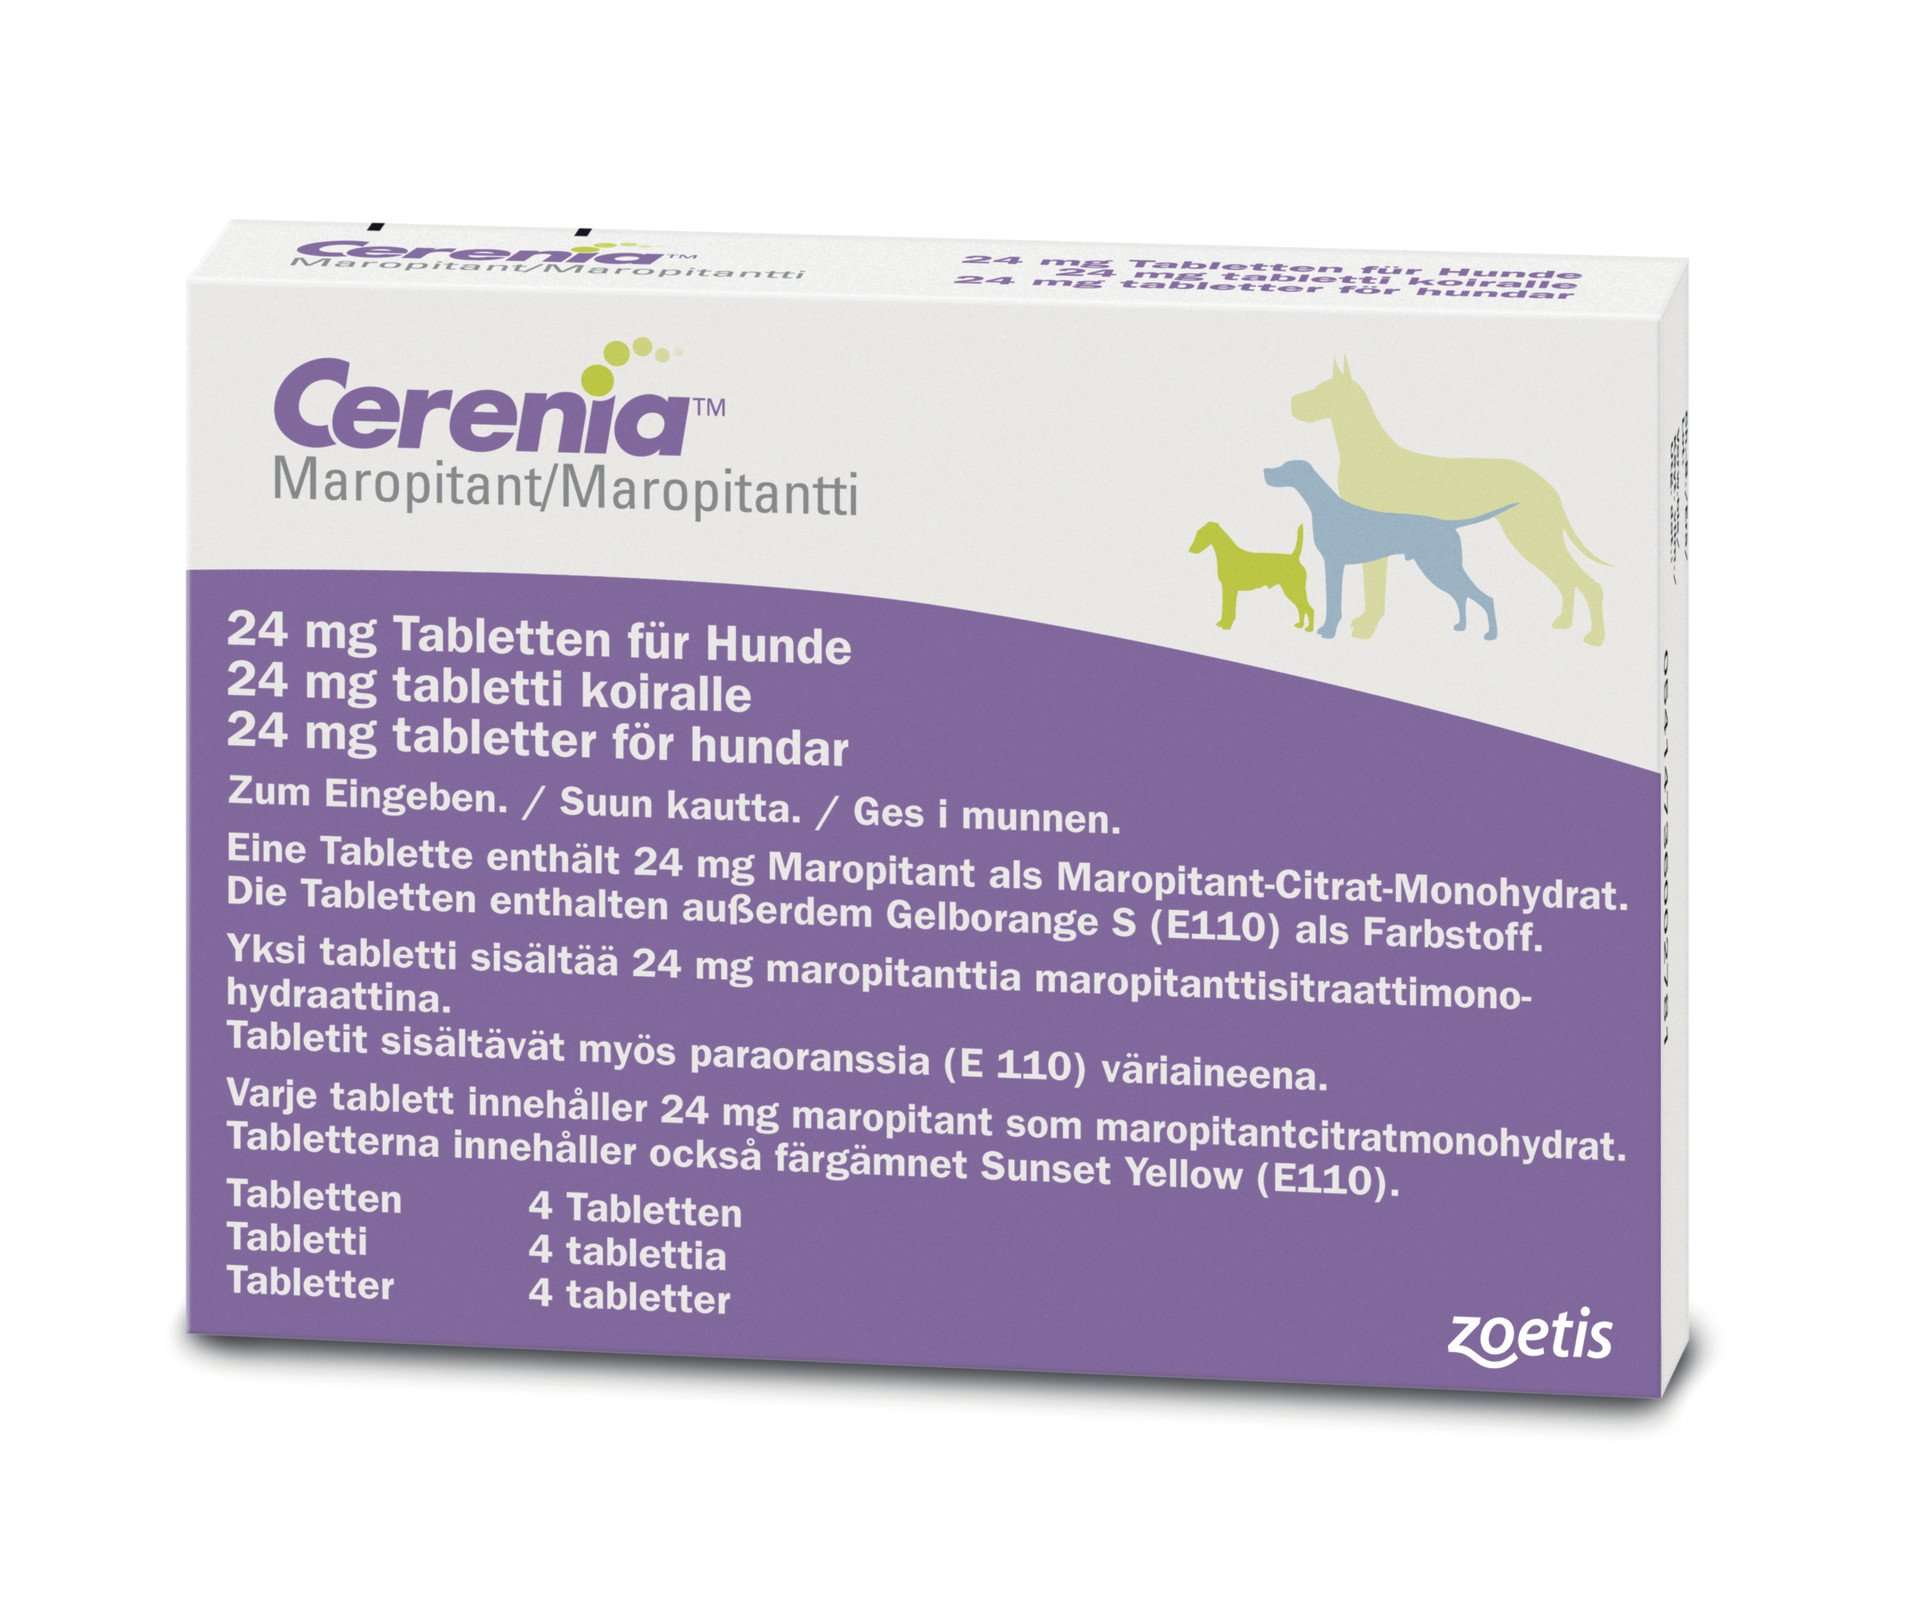 Cereniaâ¢ fÃ¼r Hunde 24 mg Tabletten 4 StÃ¼ck